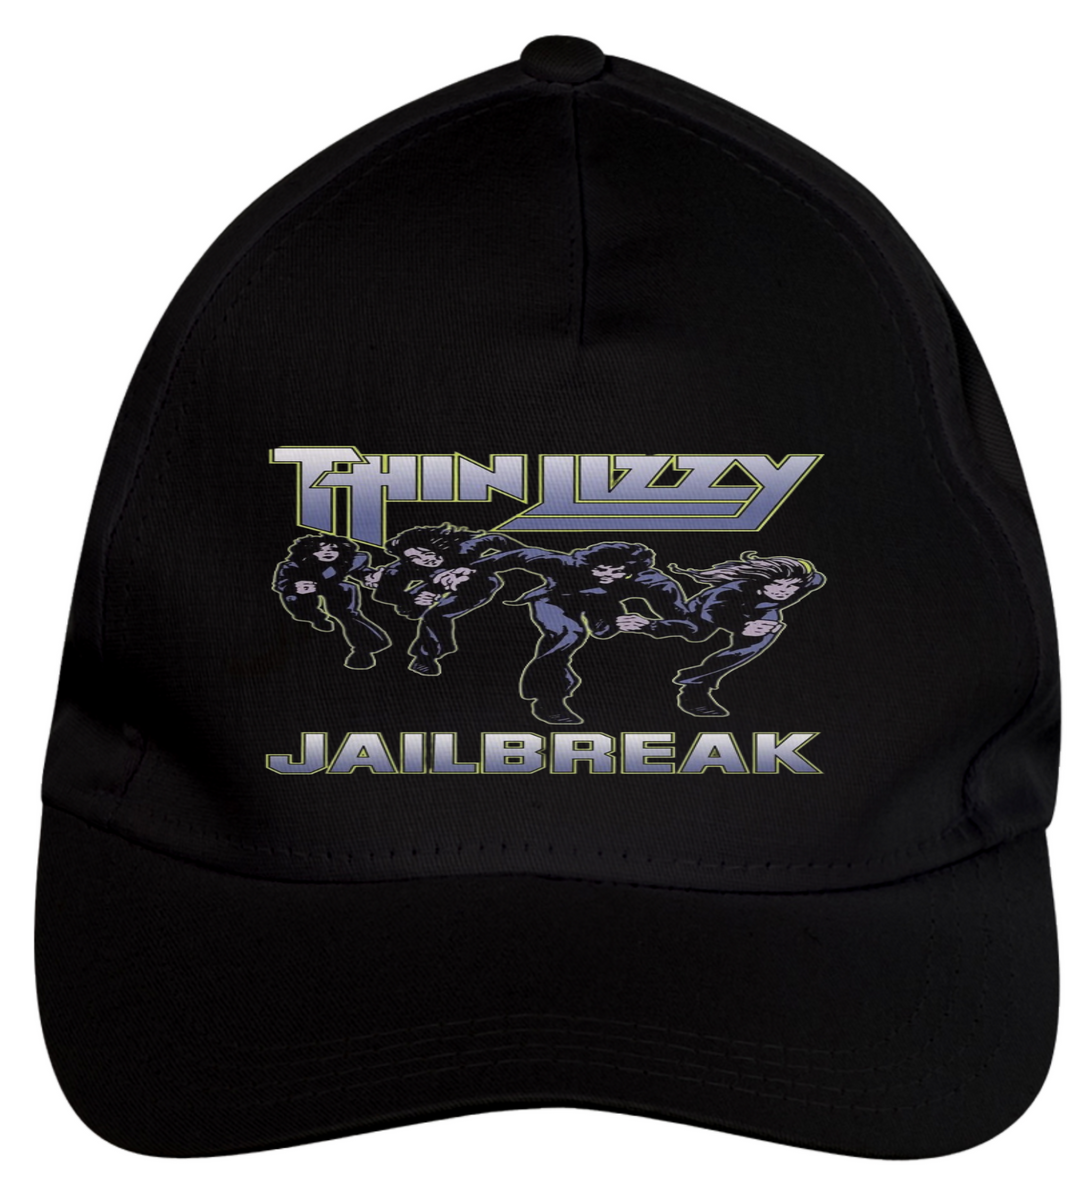 Nome do produto: Thin Lizzy - Jailbreak